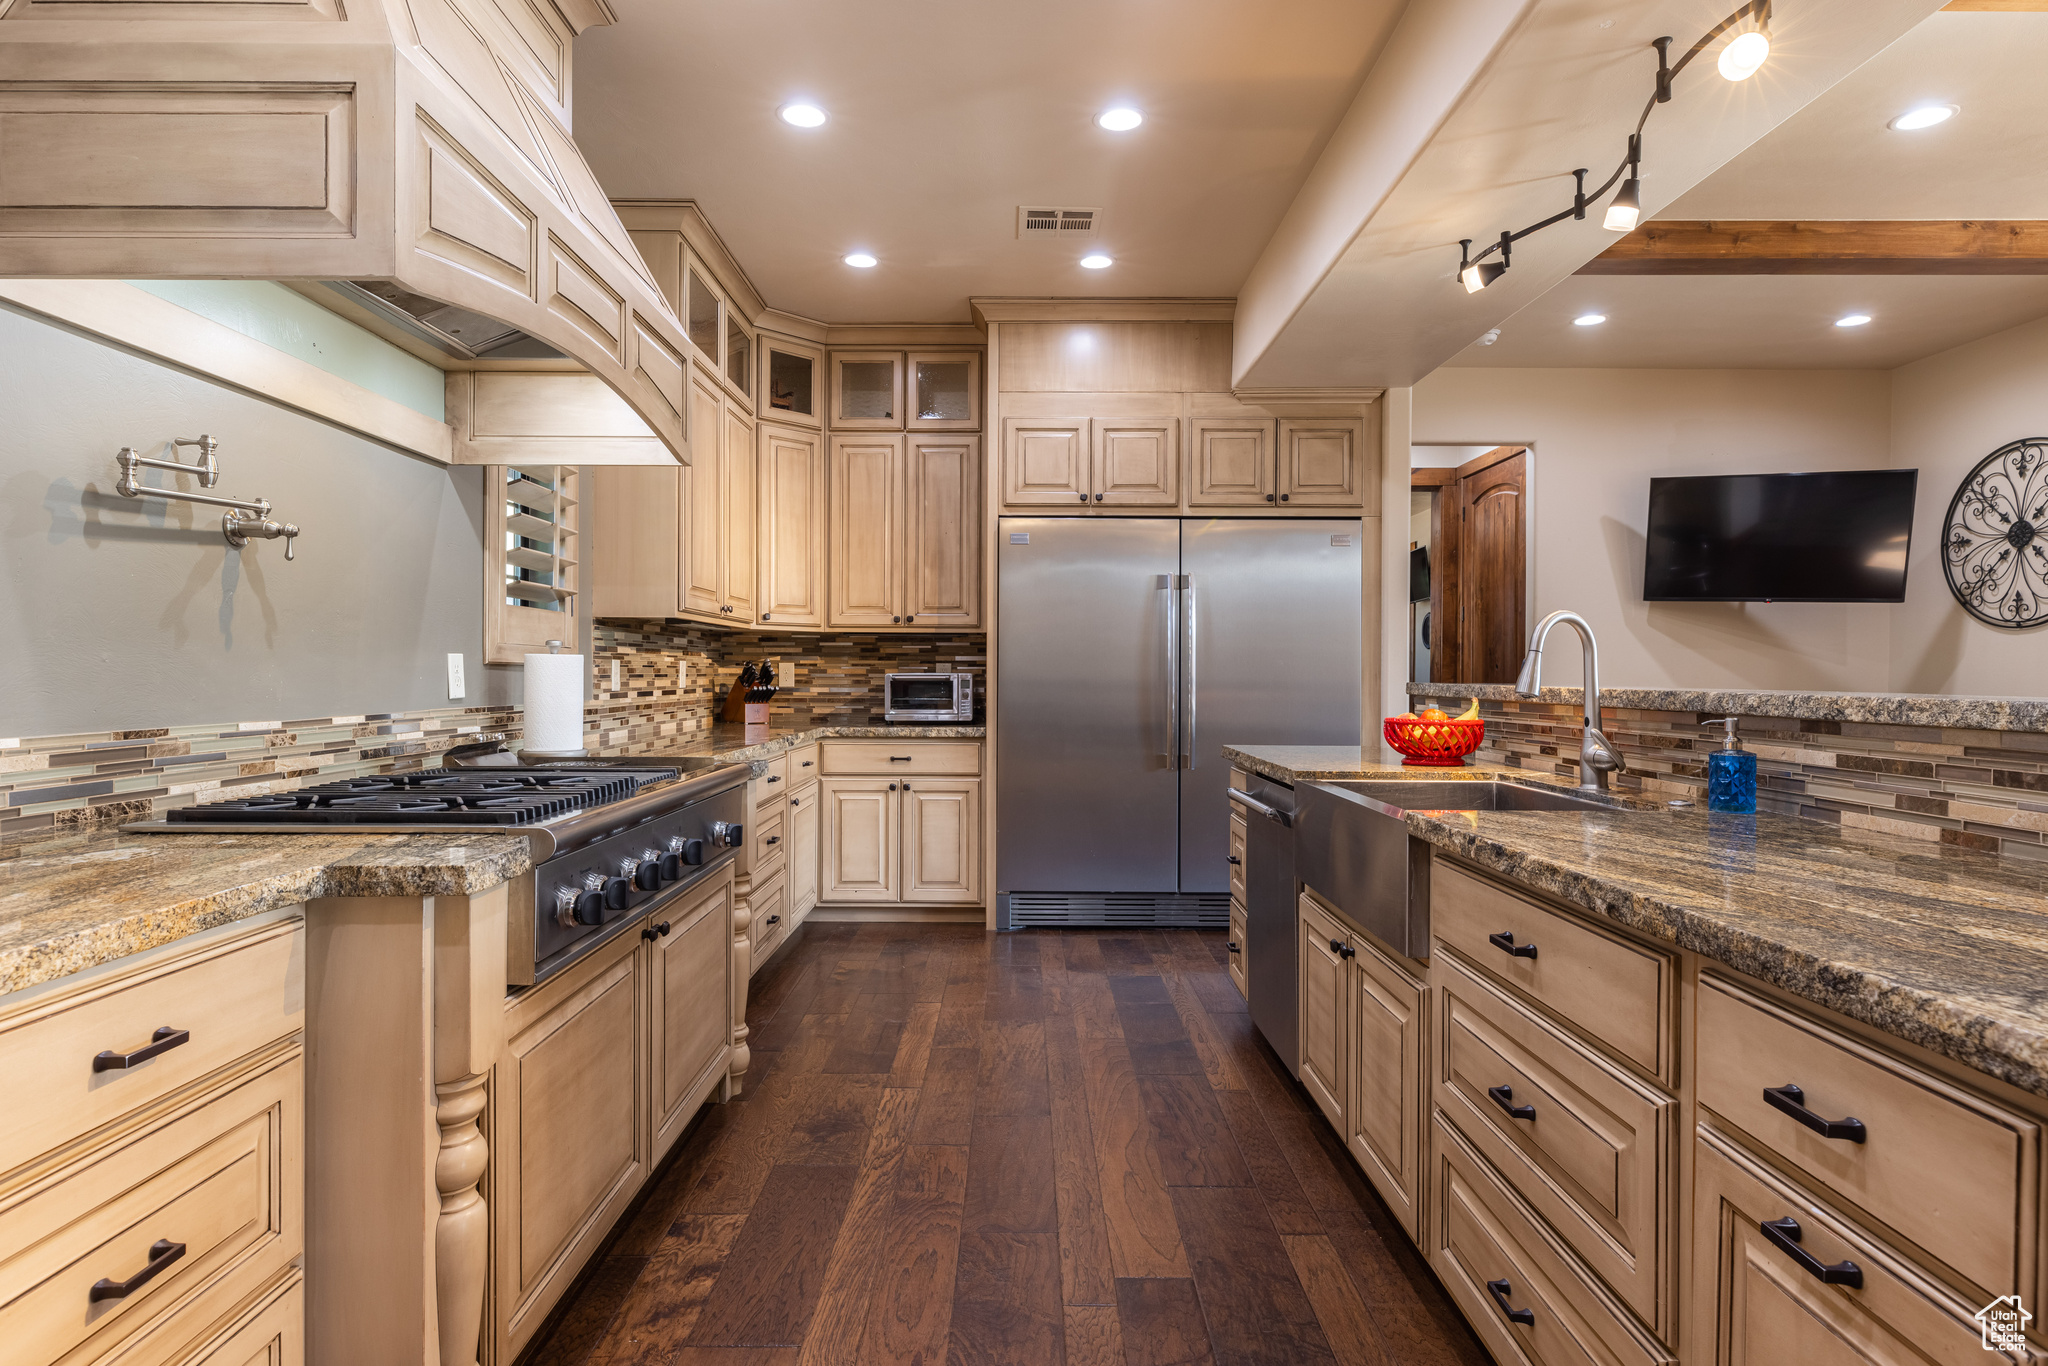 Kitchen featuring sink, tasteful backsplash, stainless steel appliances, dark hardwood / wood-style floors, and stone counters